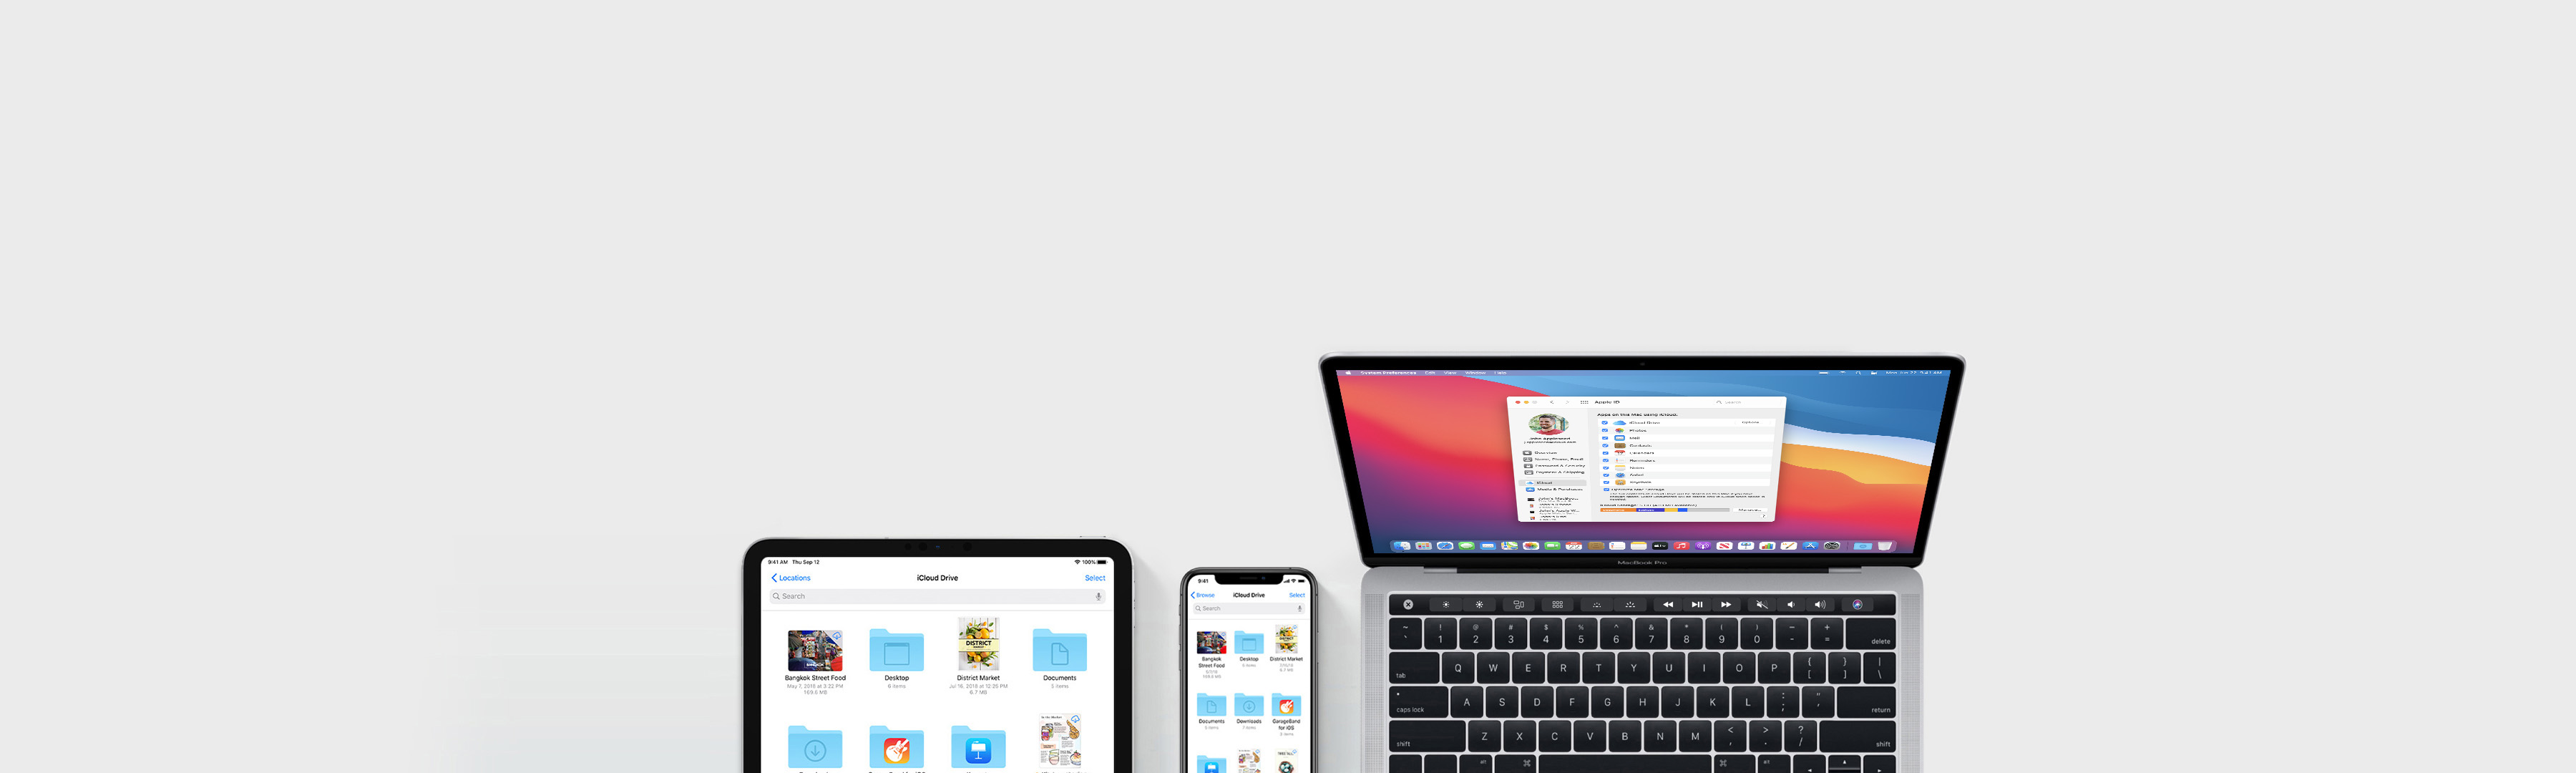 iCloud - Soporte técnico oficial de Apple